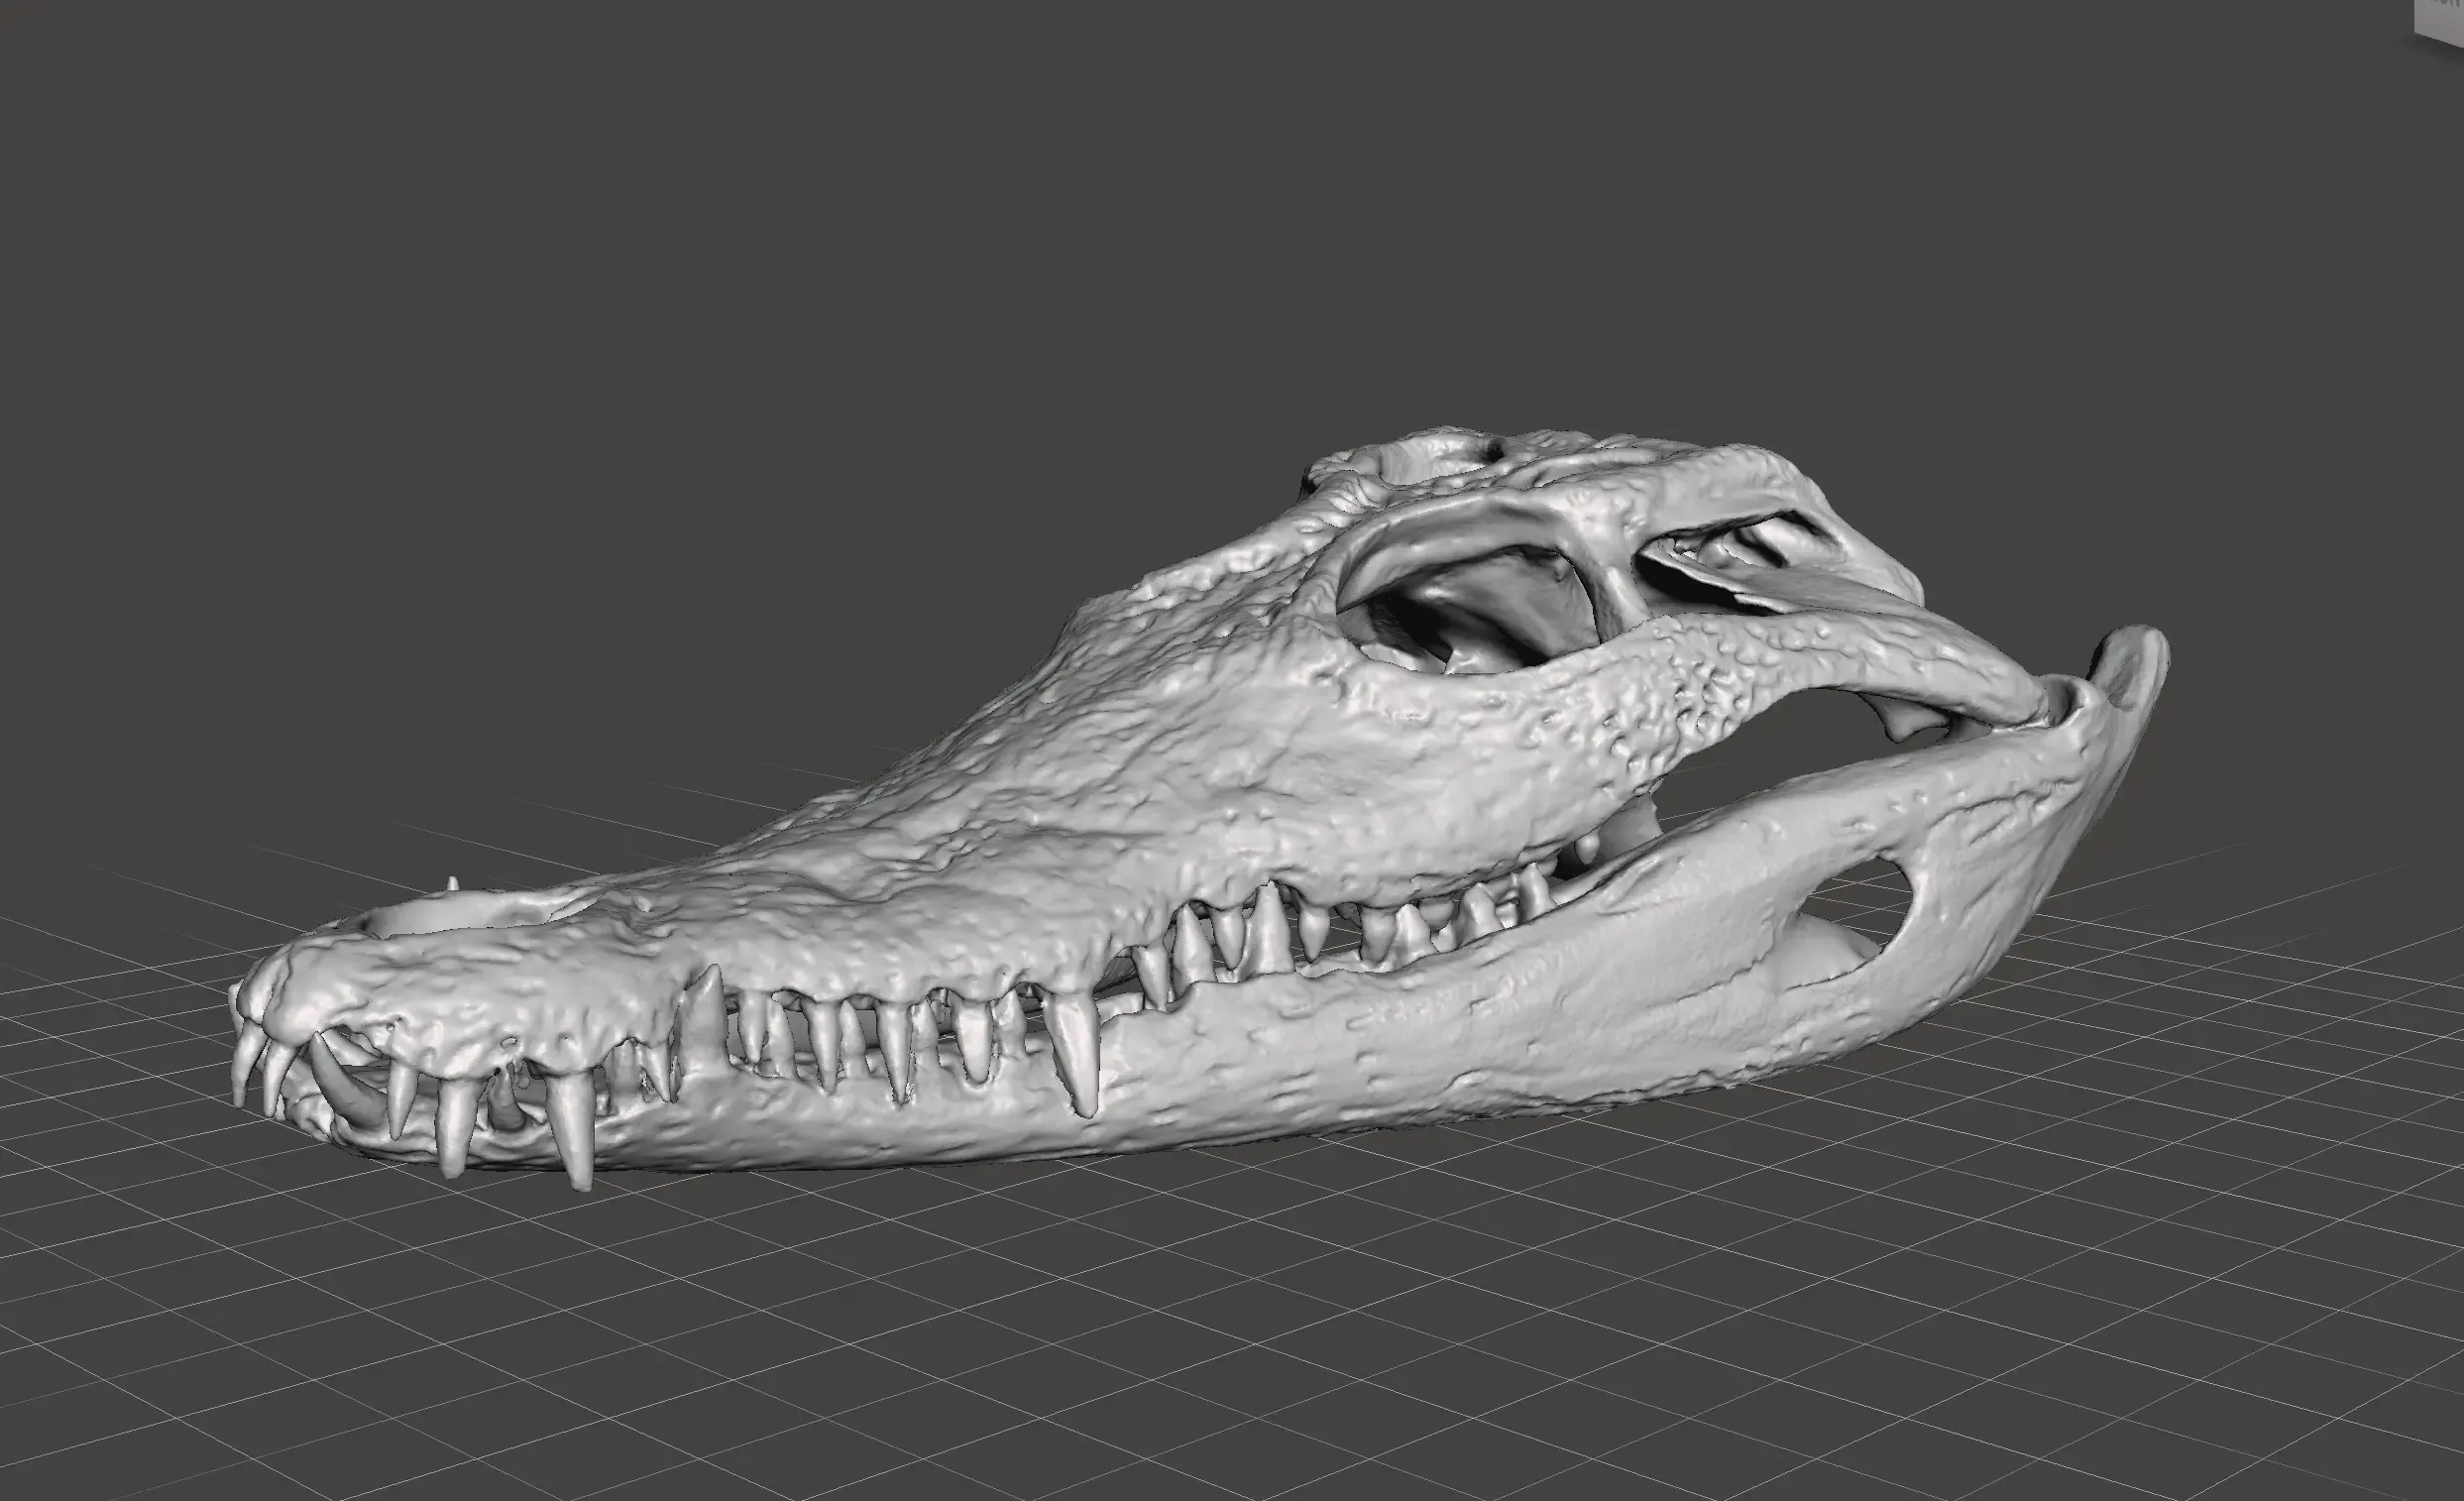 Crocodile Skull Scan, taken from original skull